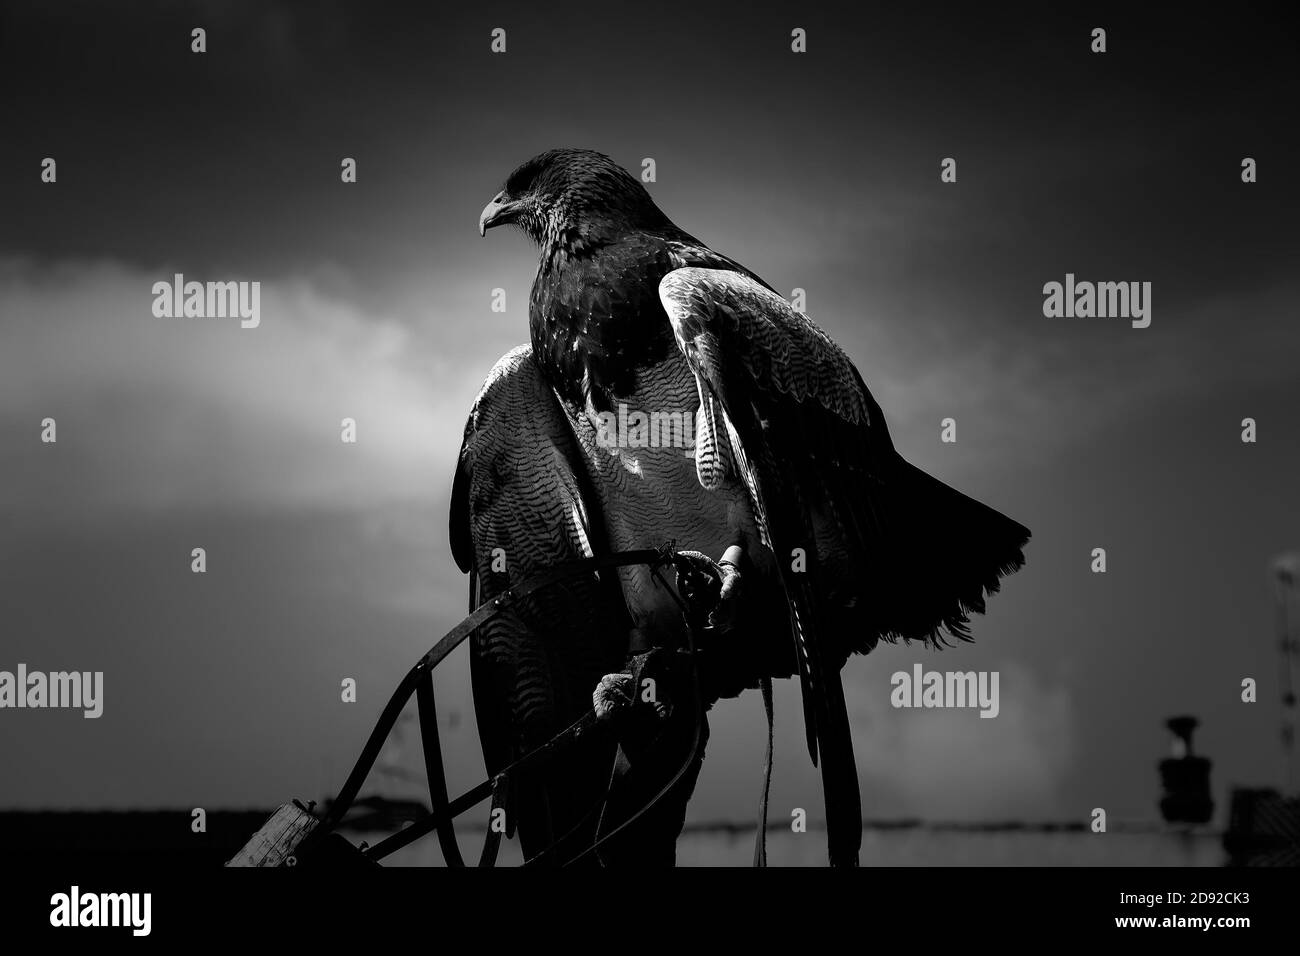 Wild eagle falconry, animals and nature, birds Stock Photo